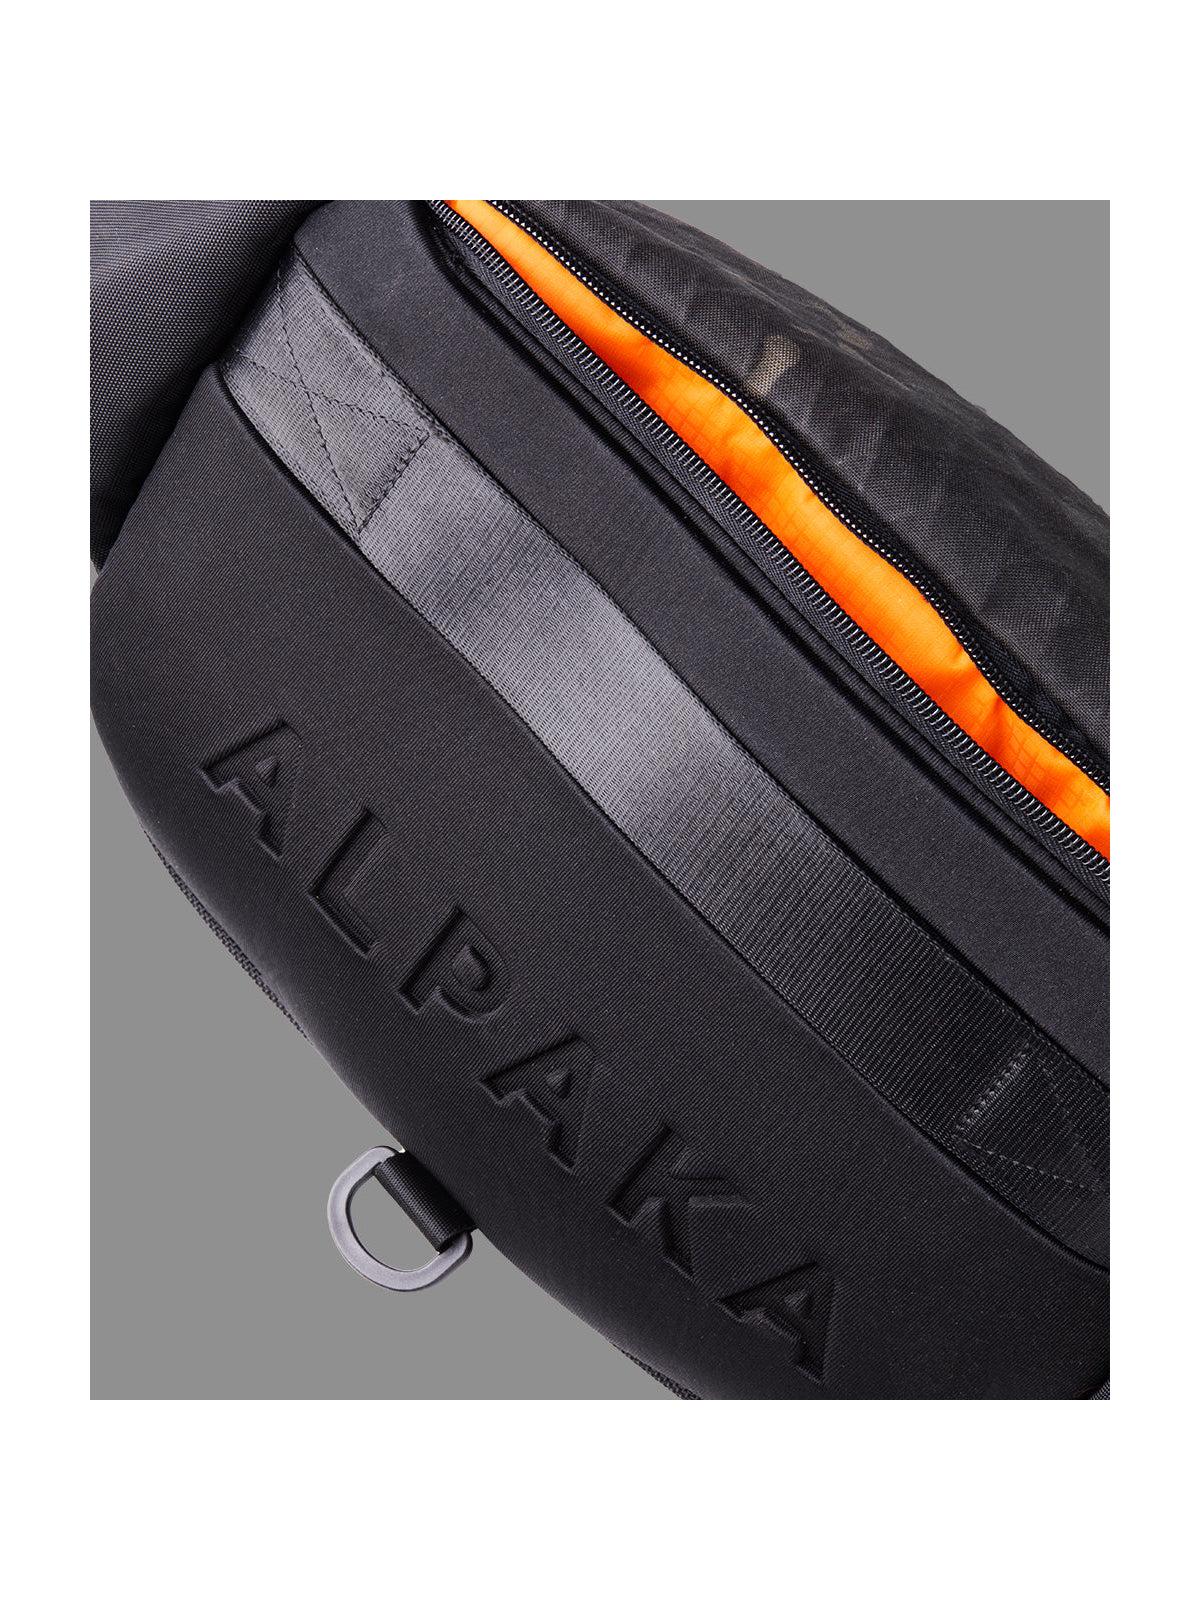 Alpaka Bravo X Sling Limited Edition Dark Multicam